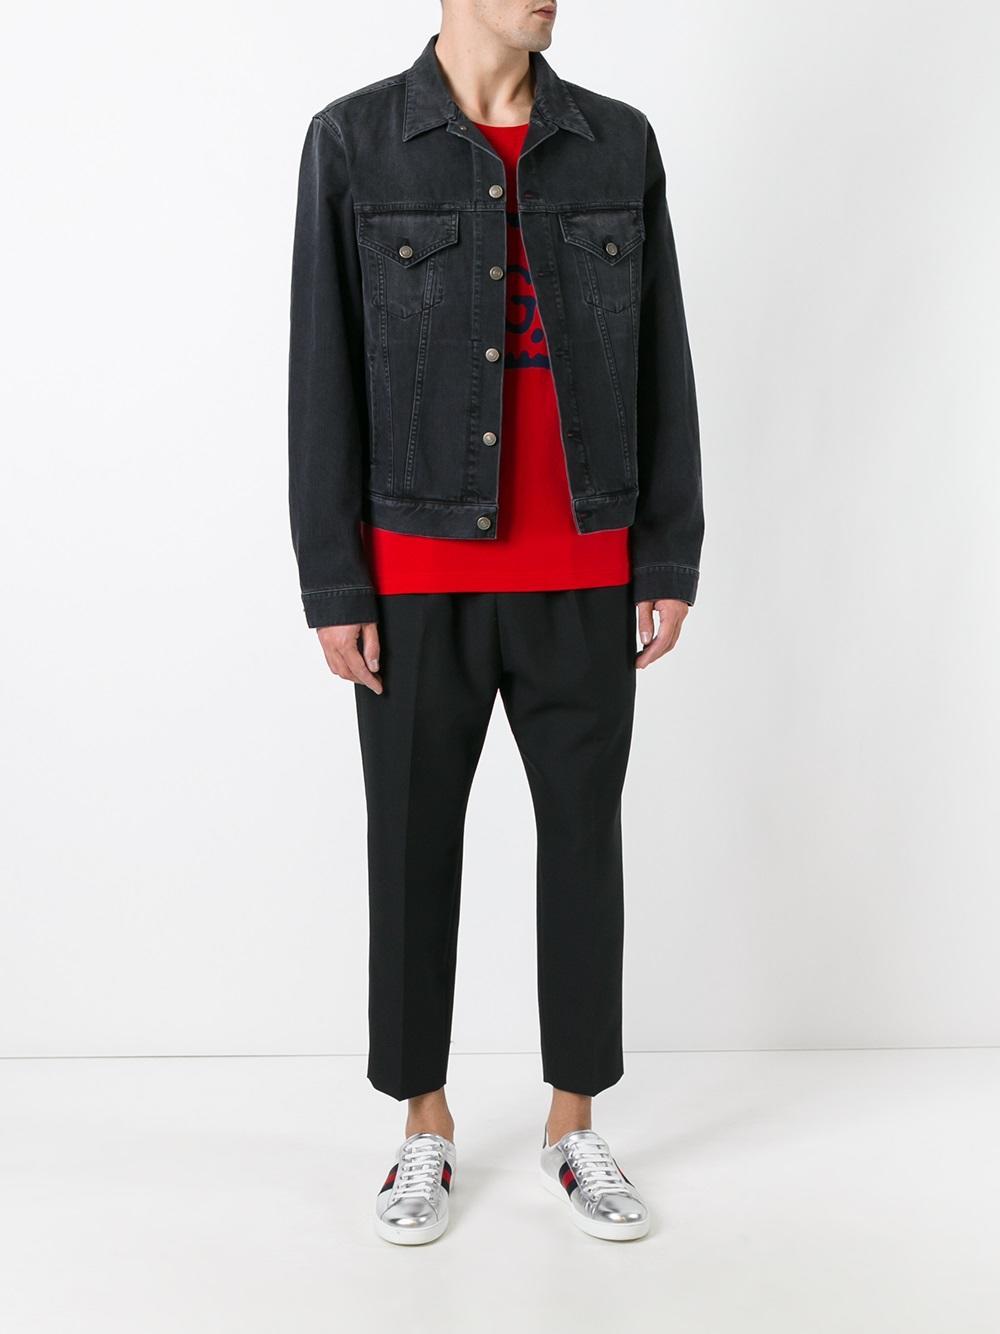 Lyst - Gucci Embroidered Denim Jacket in Black for Men